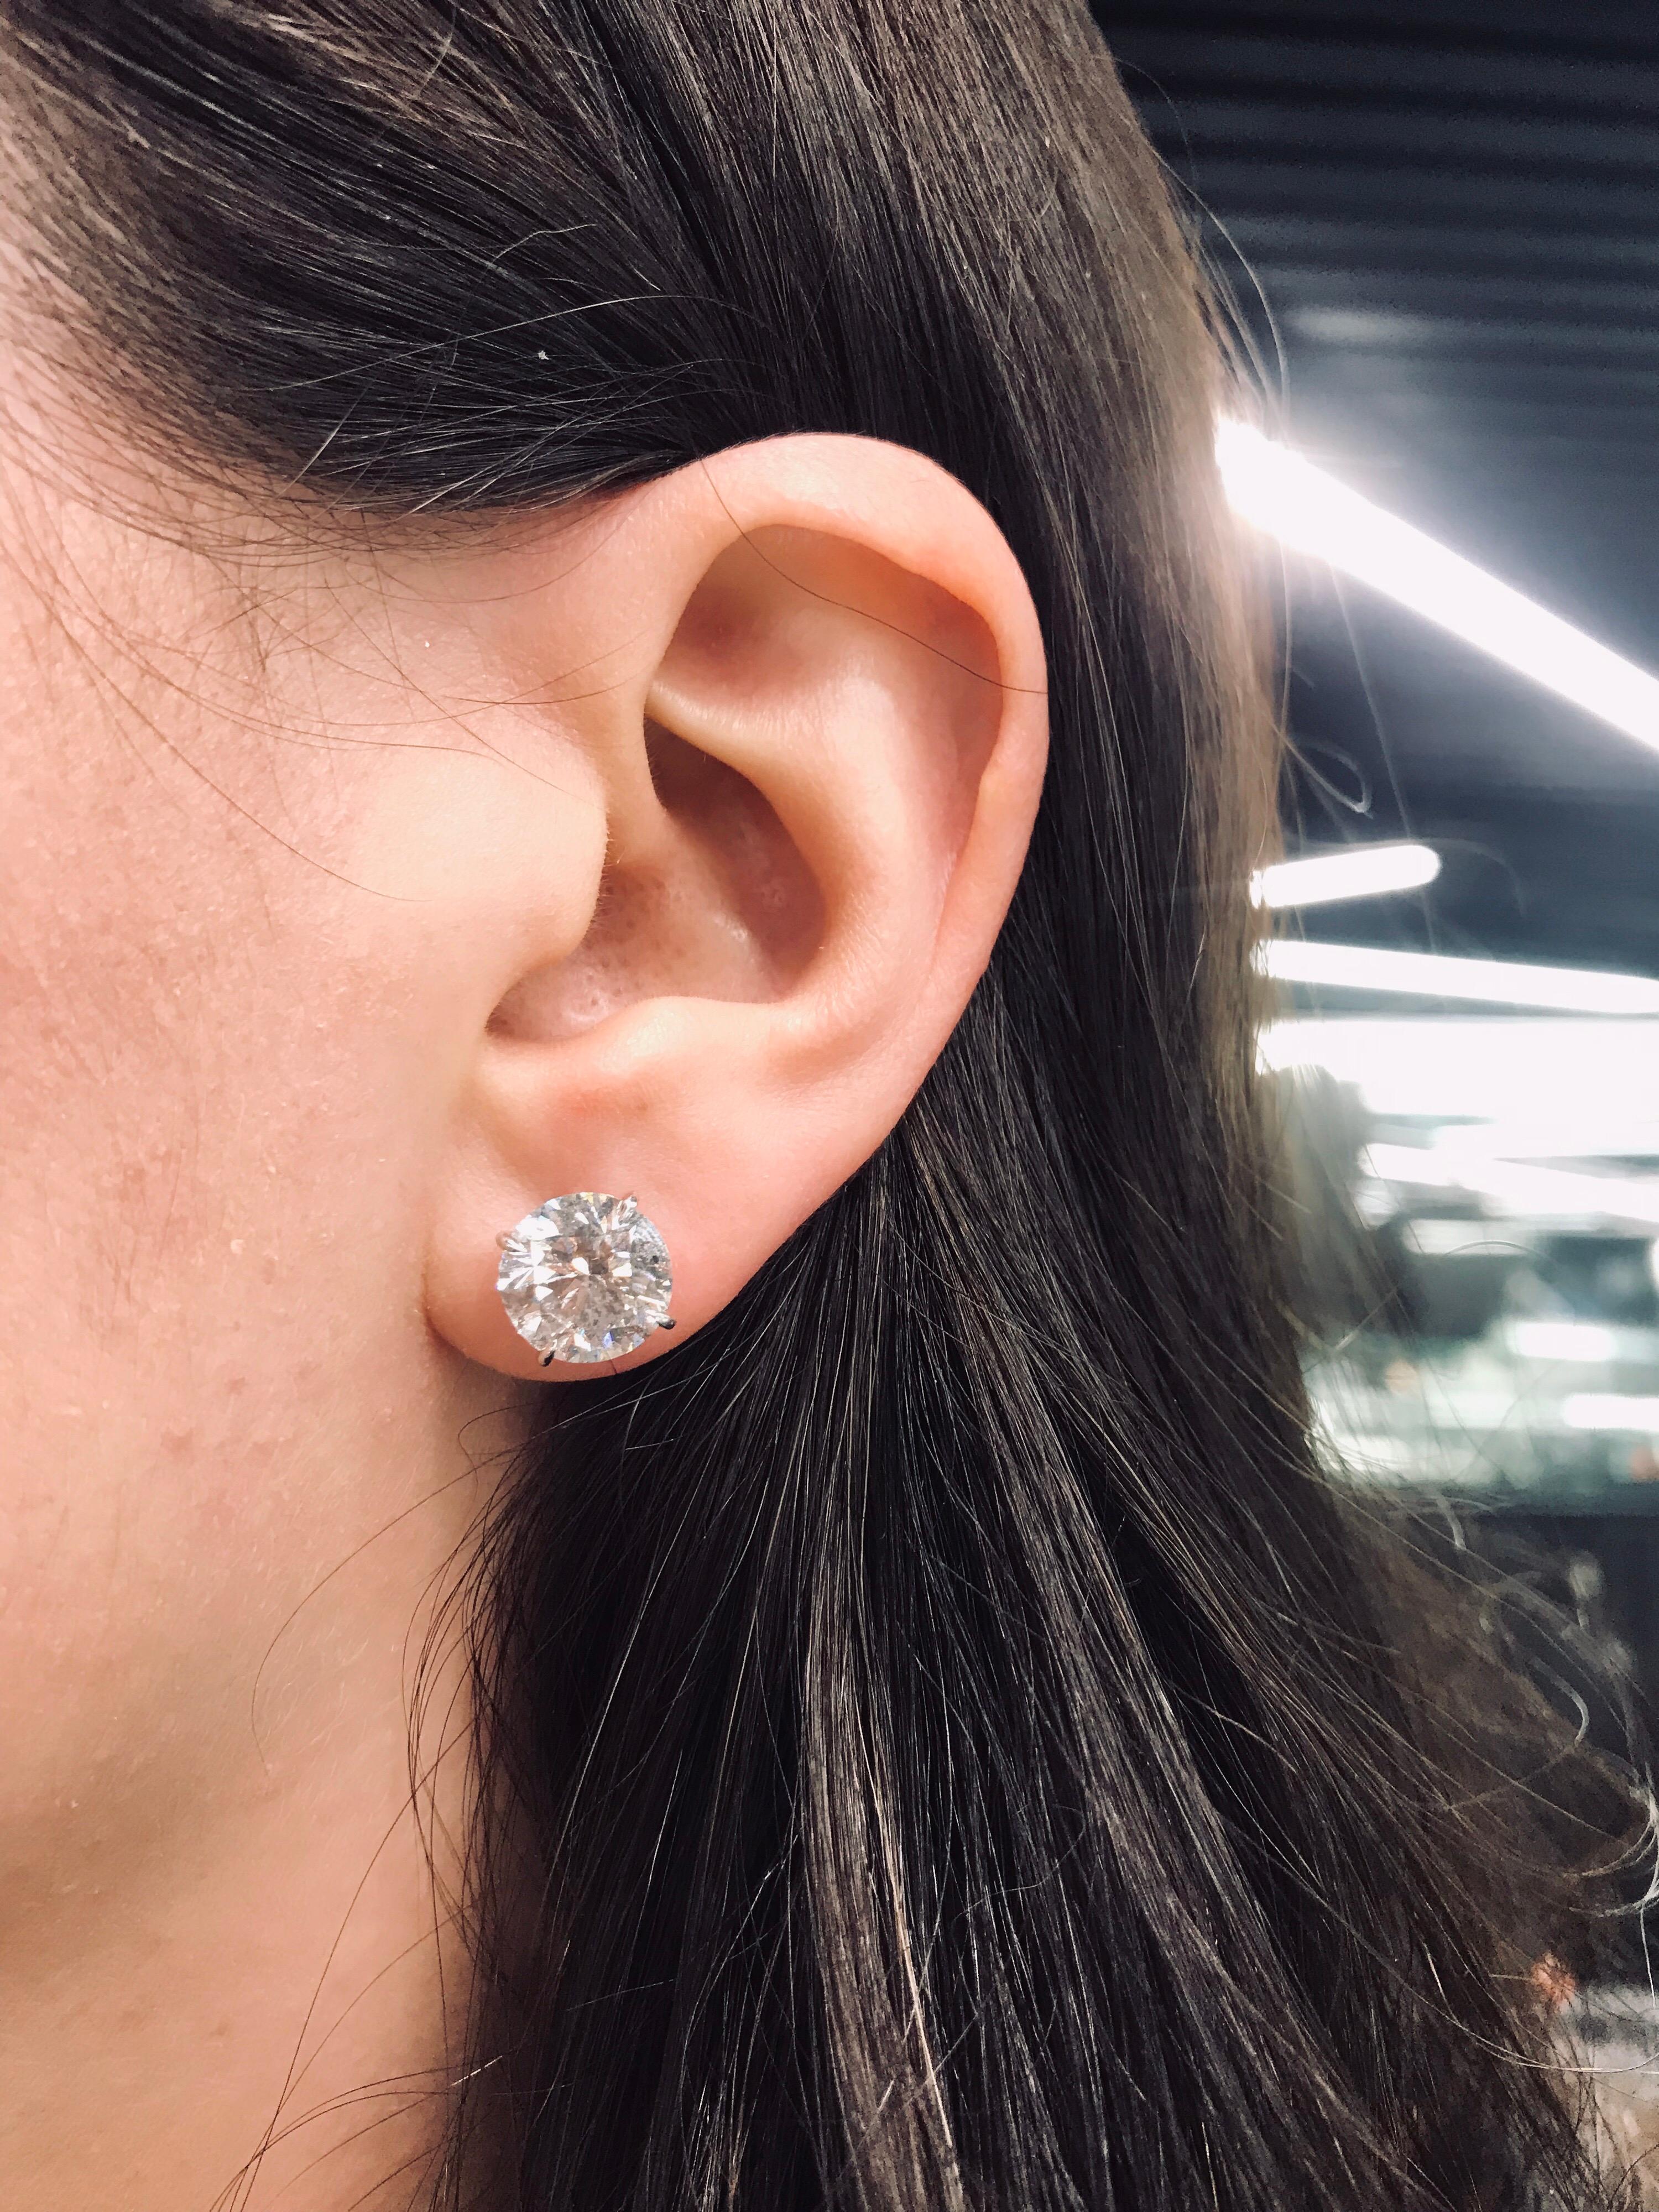 4 carat diamond earrings